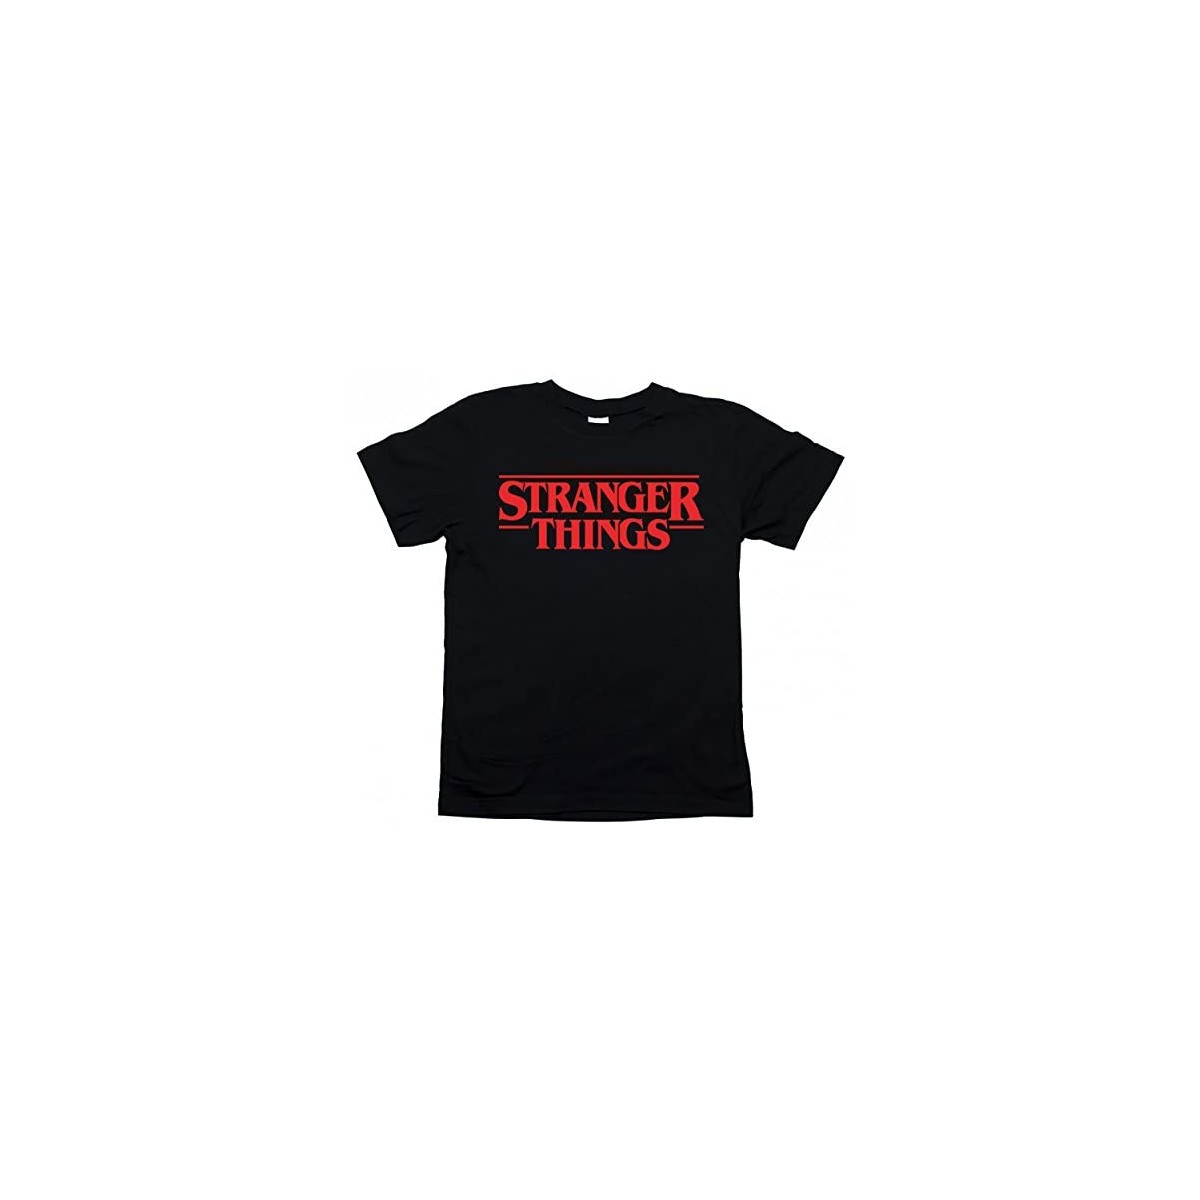 T-Shirt Stranger Things Serie TV Netflix, per bambini